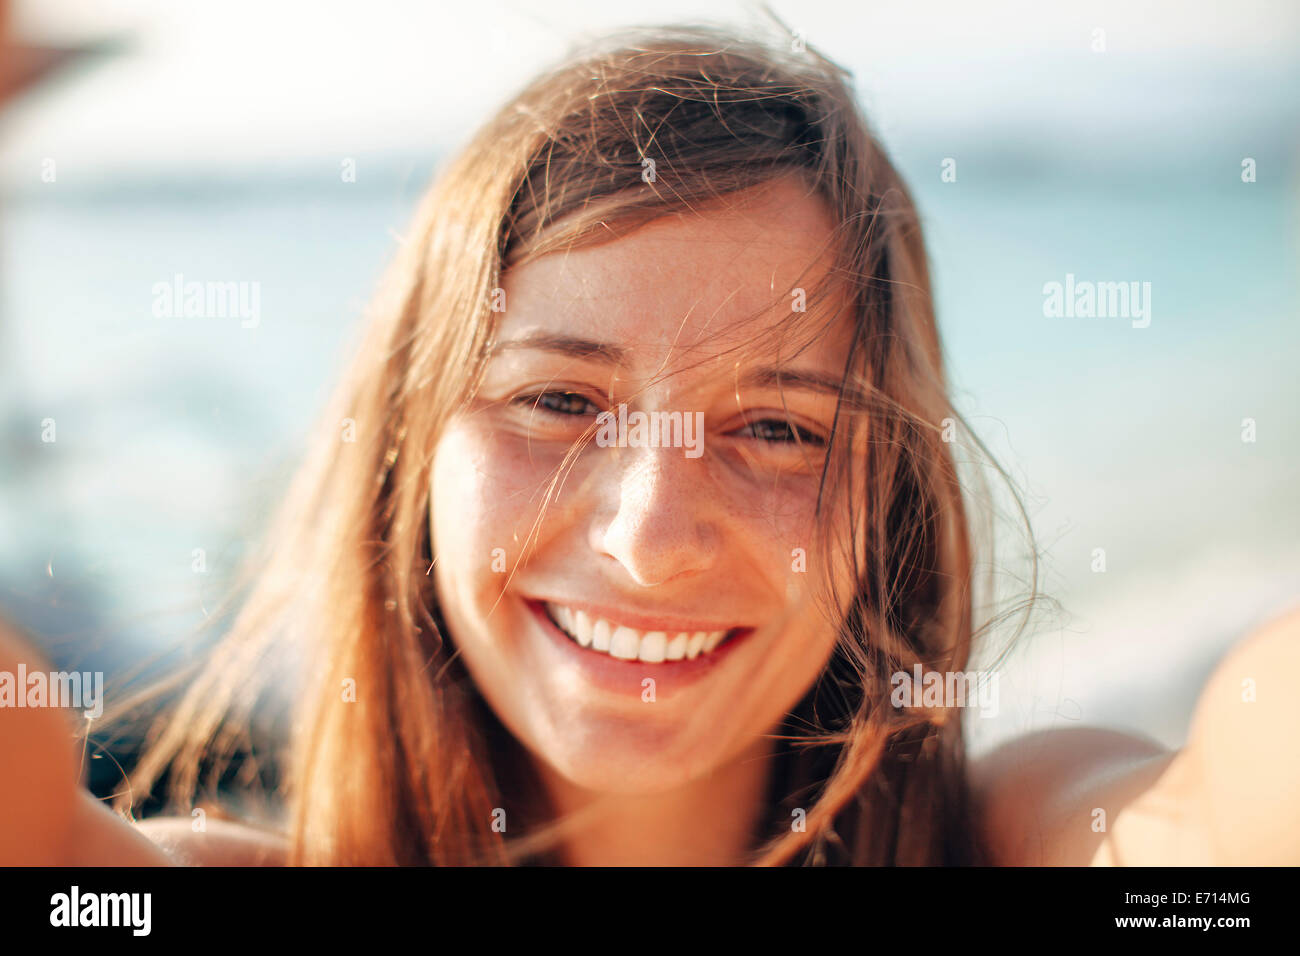 Indonesia, Gili Islands, portrait of happy woman on the beach Stock Photo